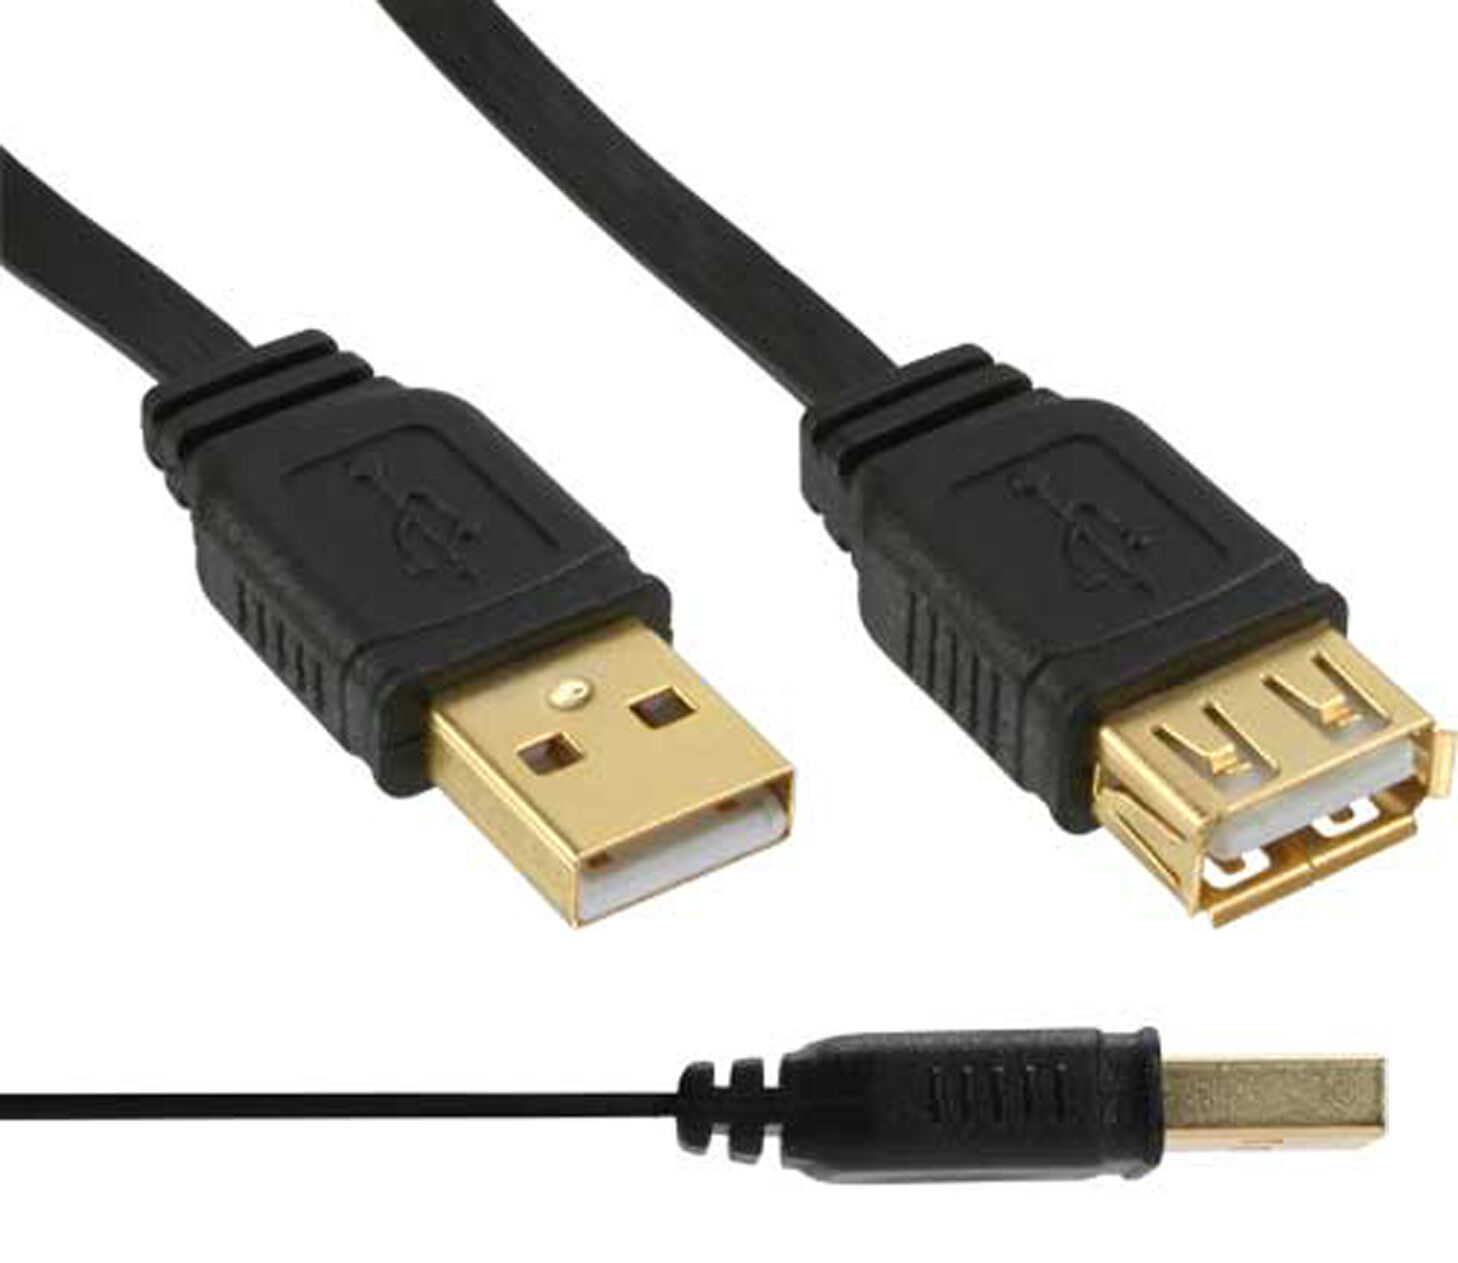 InLine USB 2.0 Flat Cable Extension a Plug / a Socket, Black, Gold, 3 4/12ft